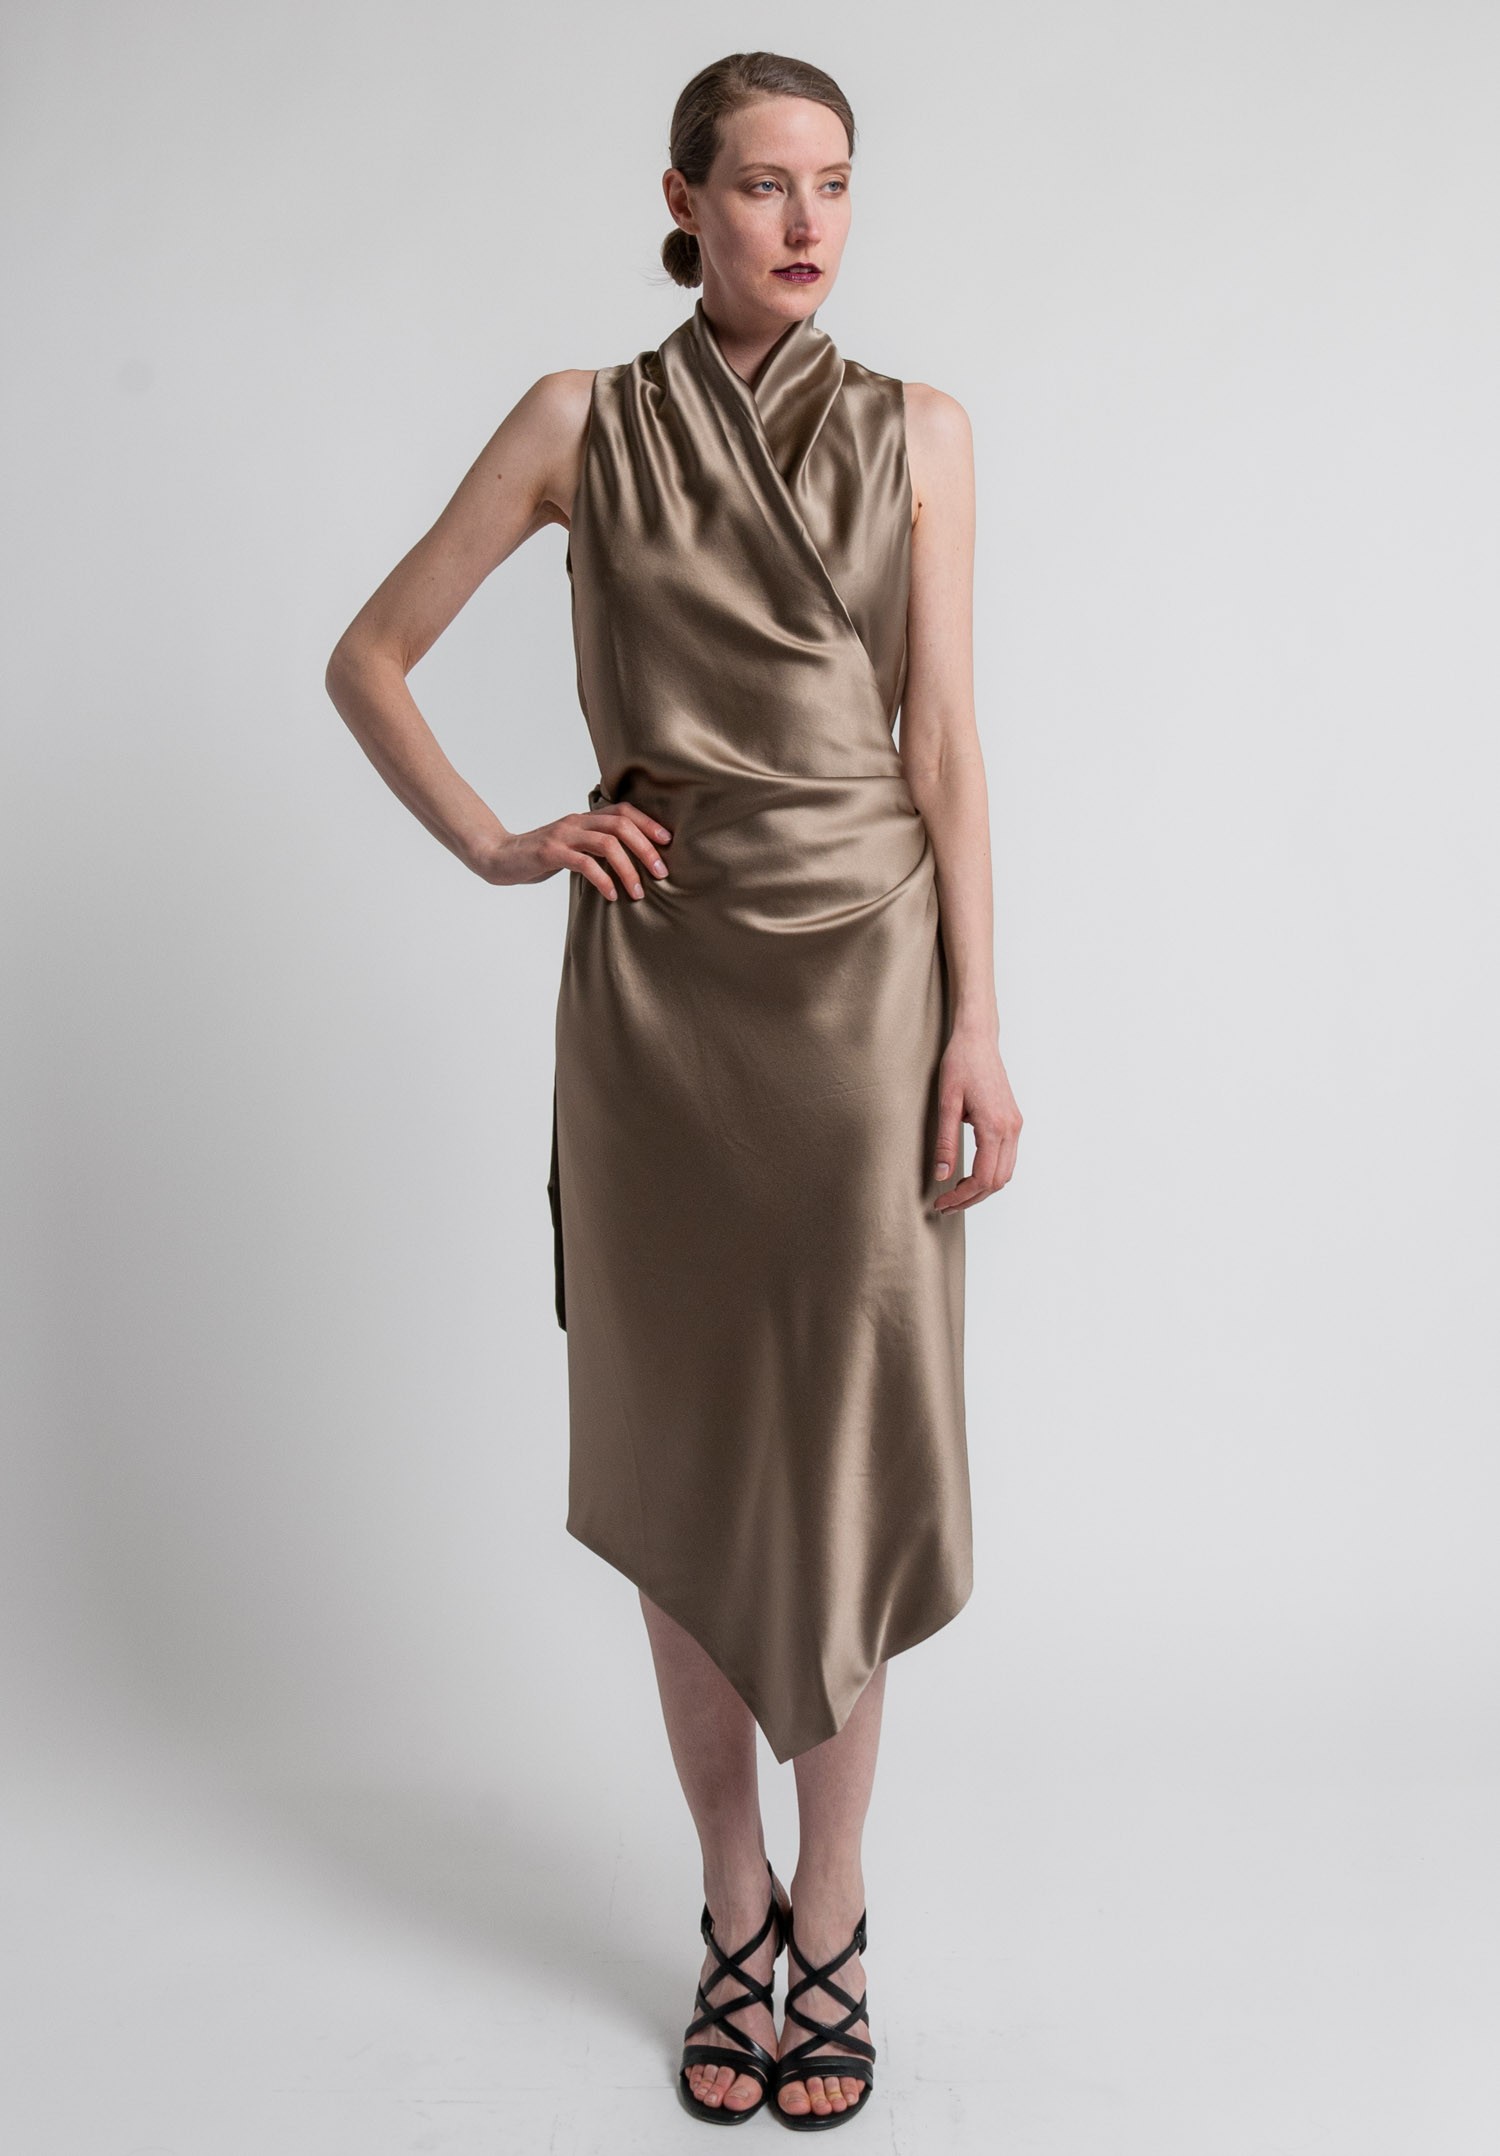 Peter Cohen 2-Layer Silk Victor Dress in Khaki | Santa Fe Dry Goods ...